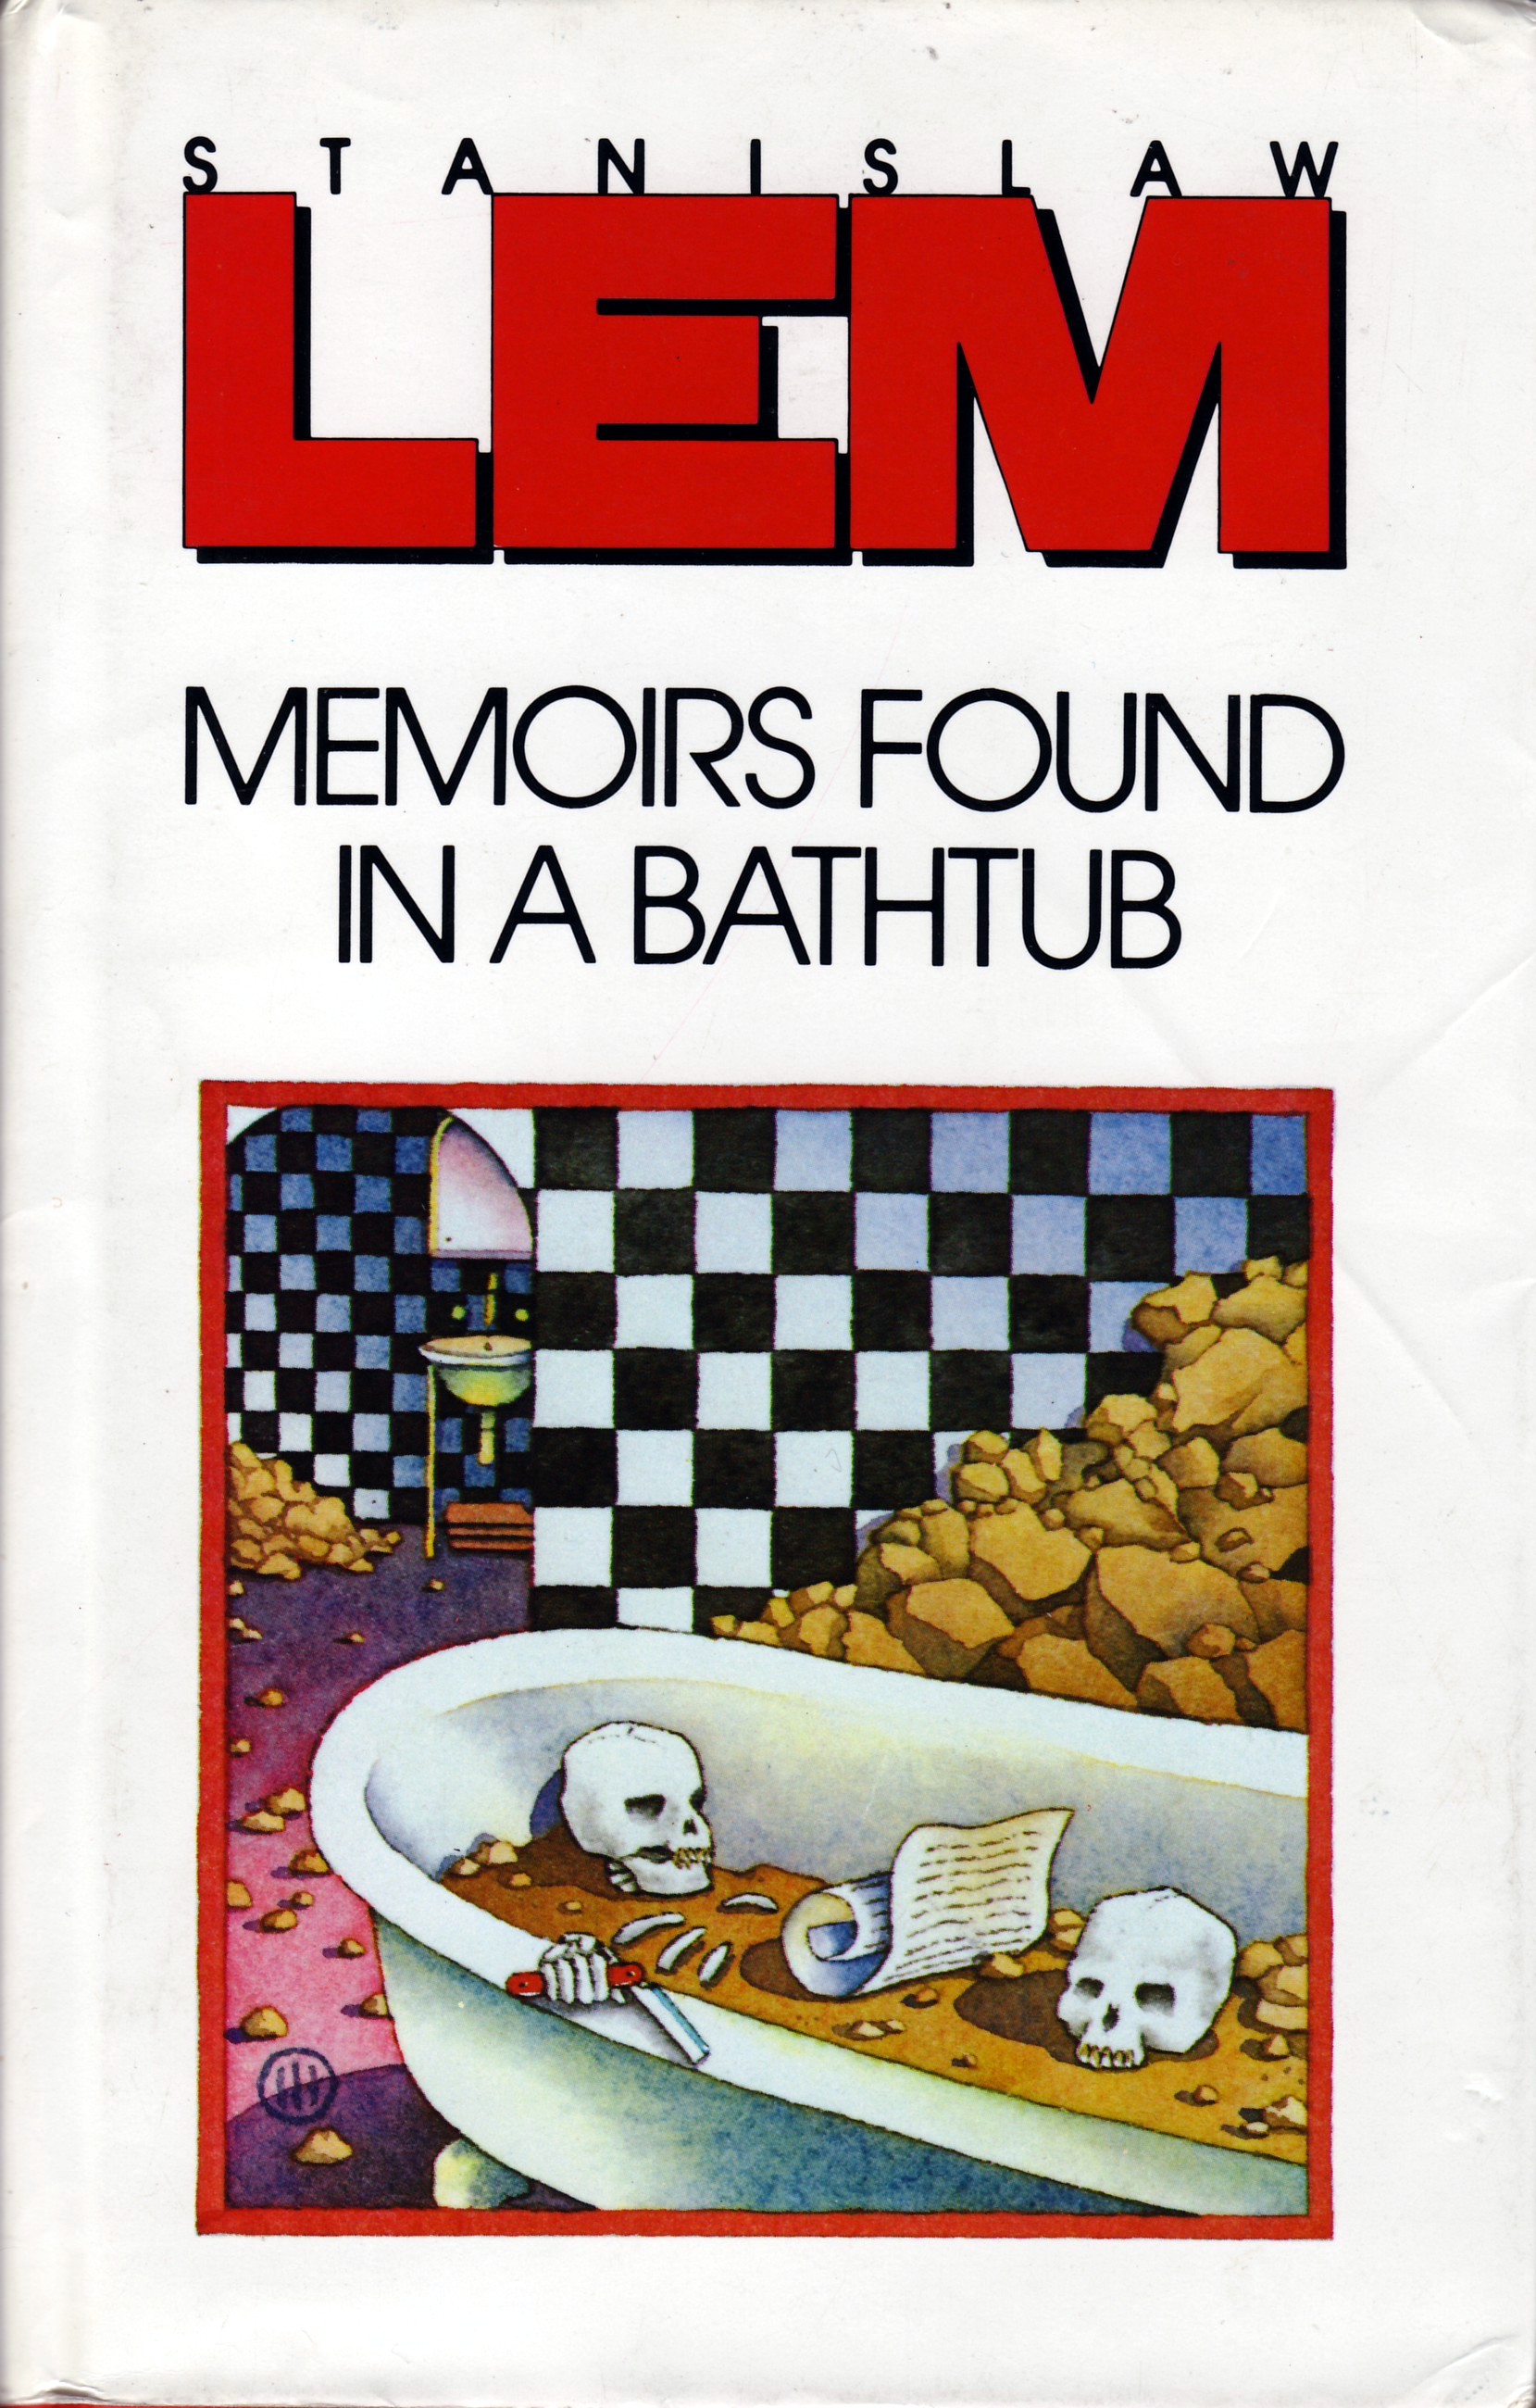 Memoirs Found in a Bathtub English Andre Deutsch 1992.jpg